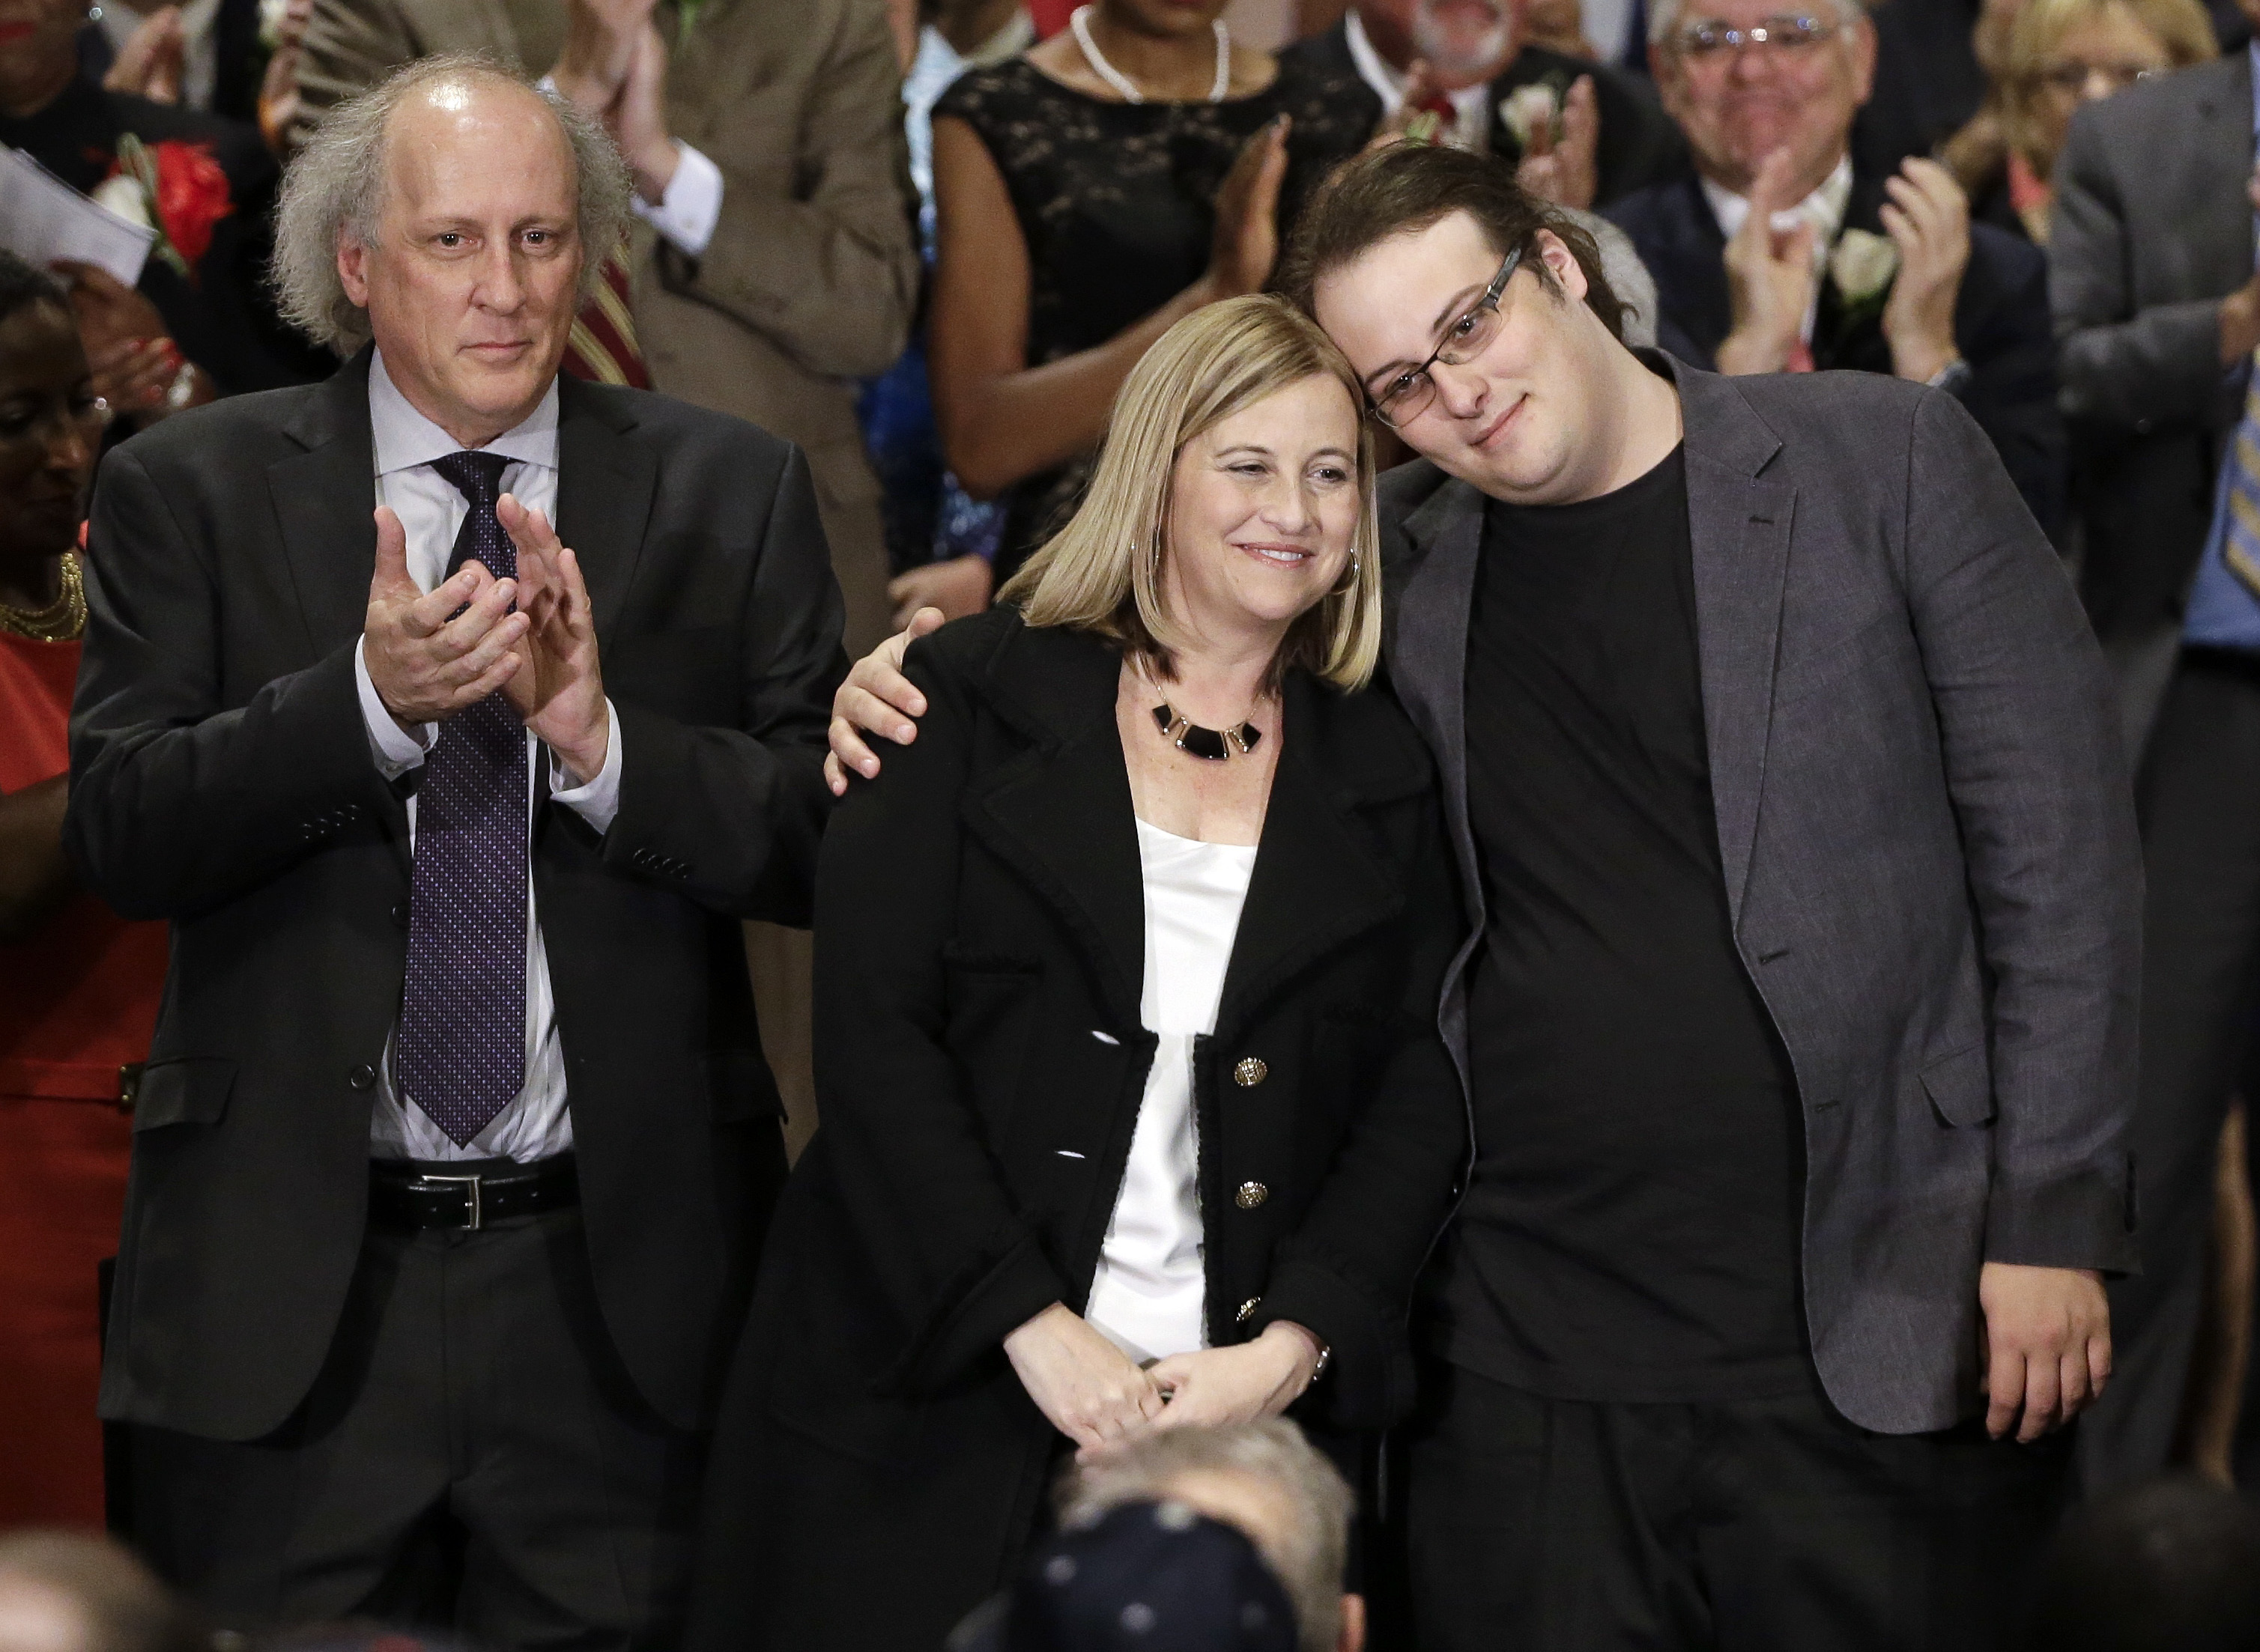 Nashville Mayor Megan Barry, center, is hugged by her son, Max, as her husband, Bruce, left, applauds after she was sworn into office in Nashville, Tenn., on Sept. 25, 2015 (Mark Humphrey—AP)